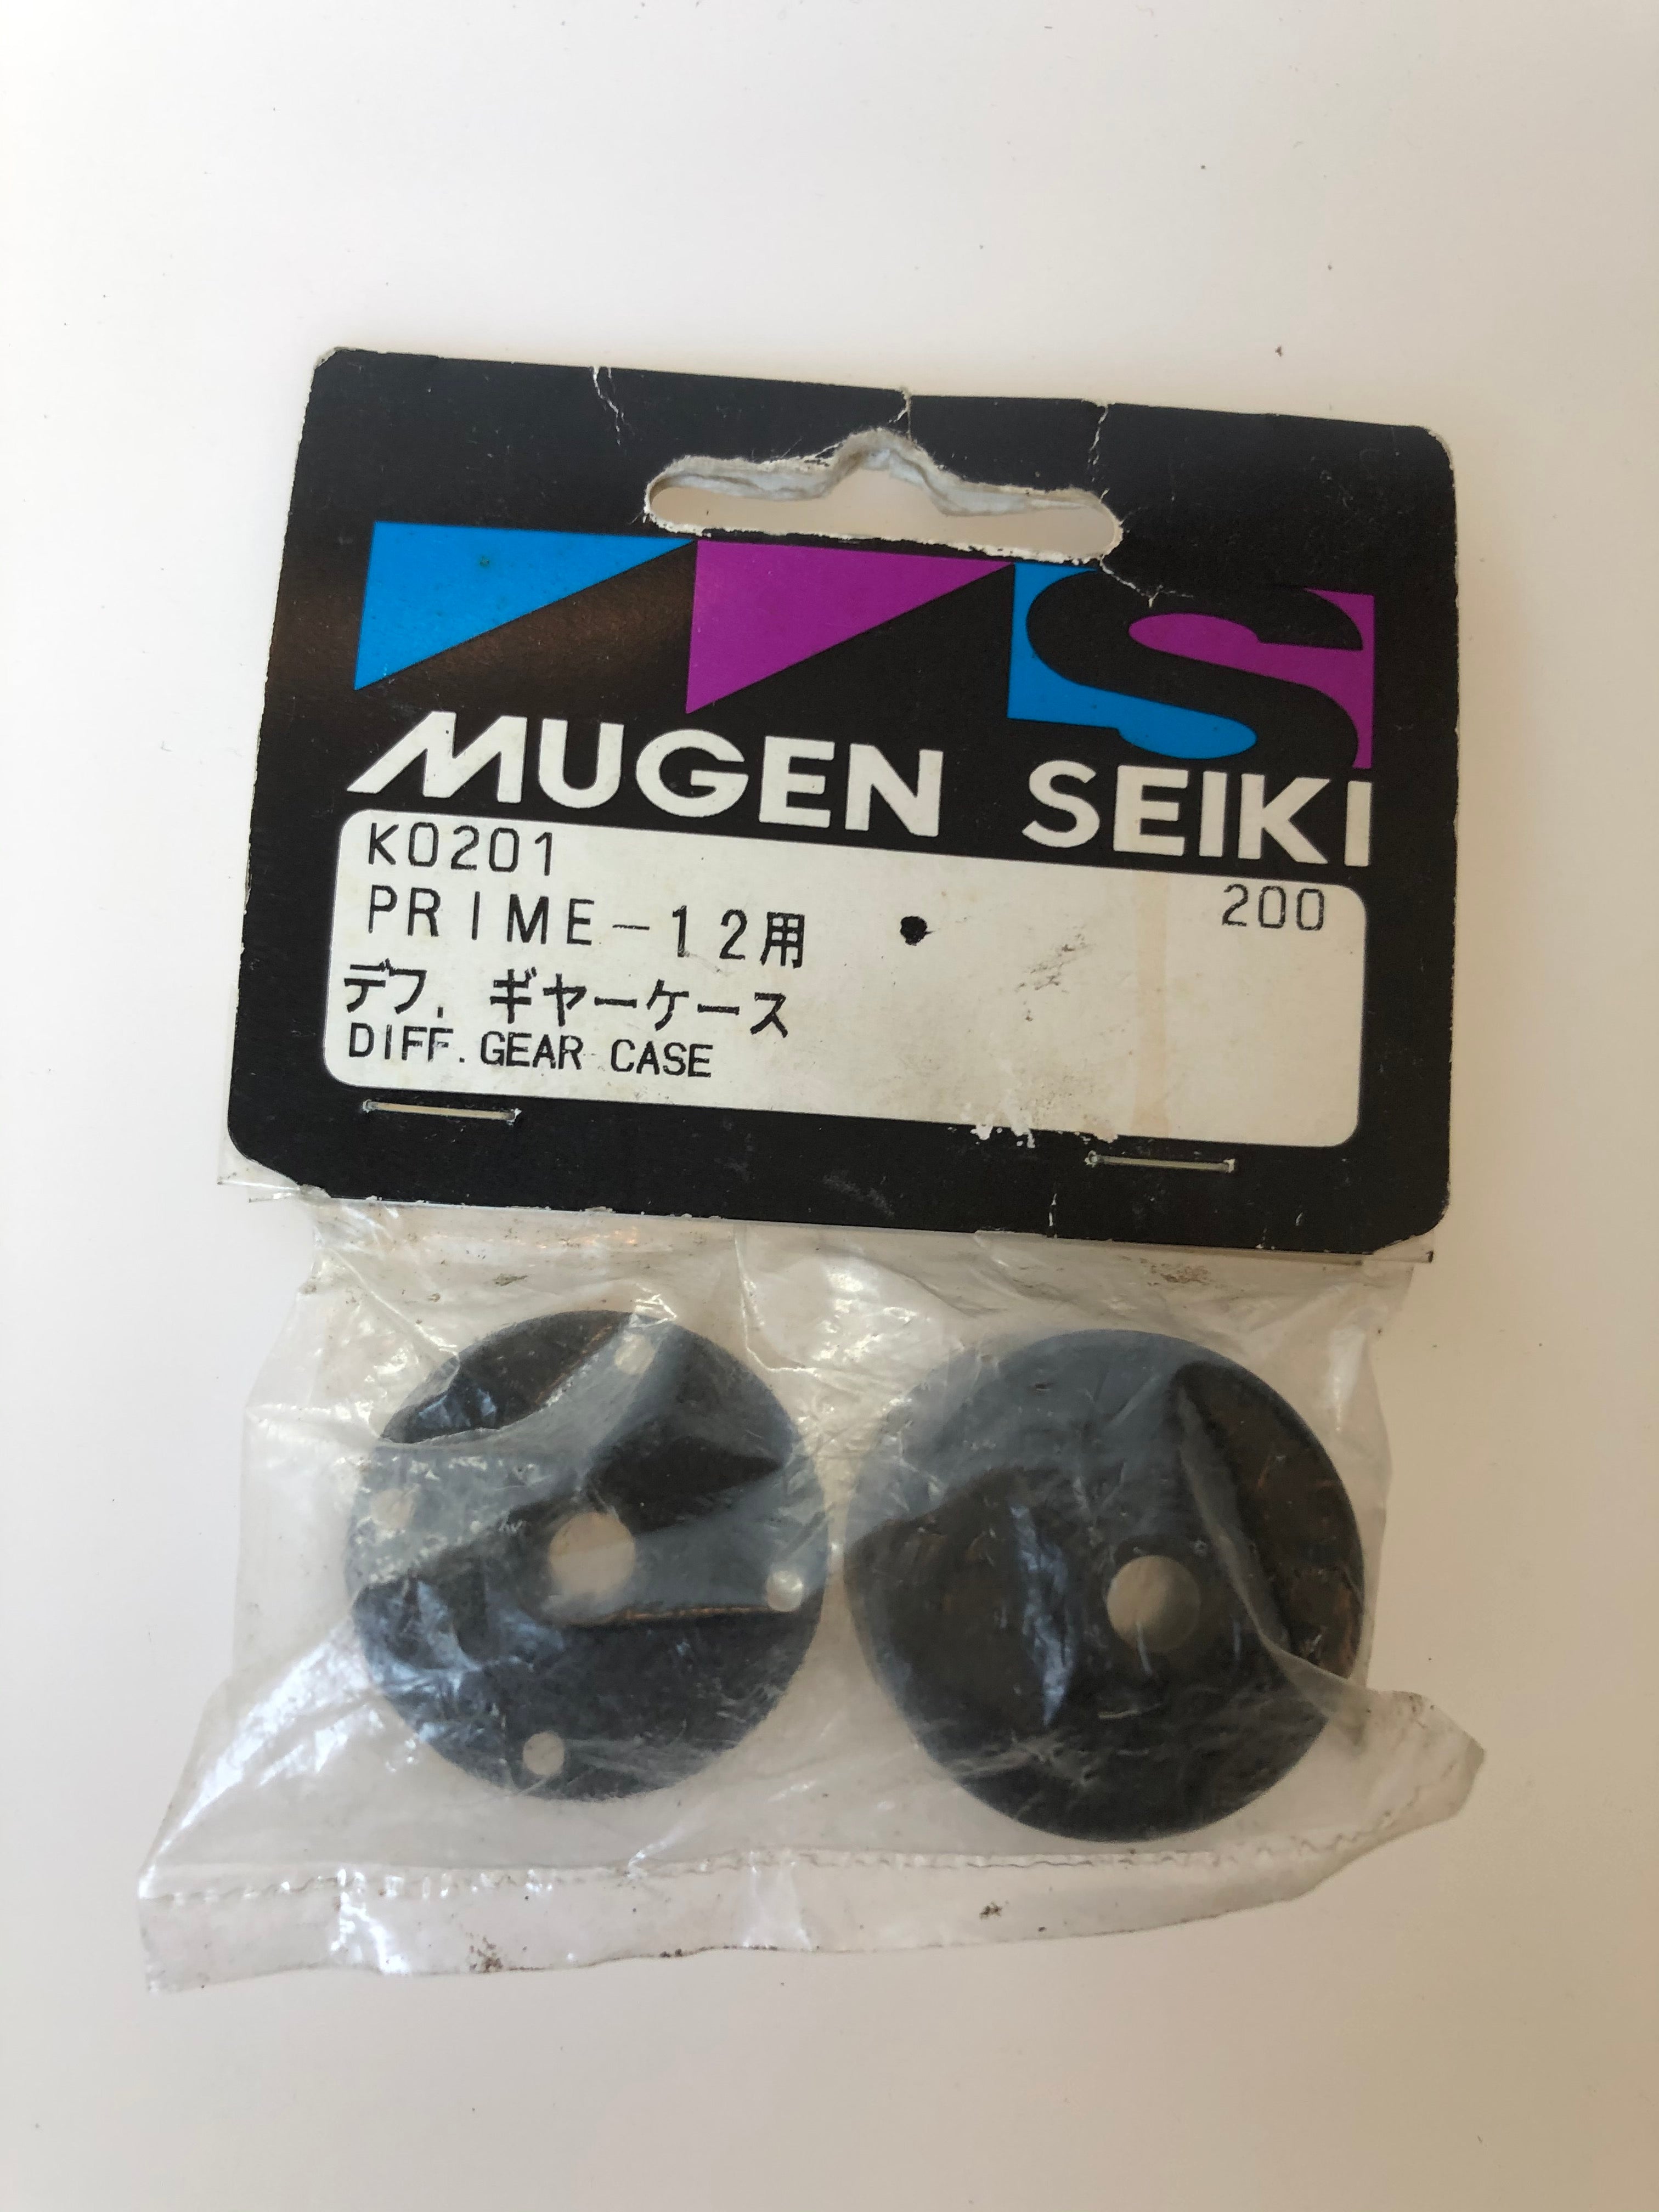 Mugen Seiki Diff Gear Case Prime-12 MUGK0201